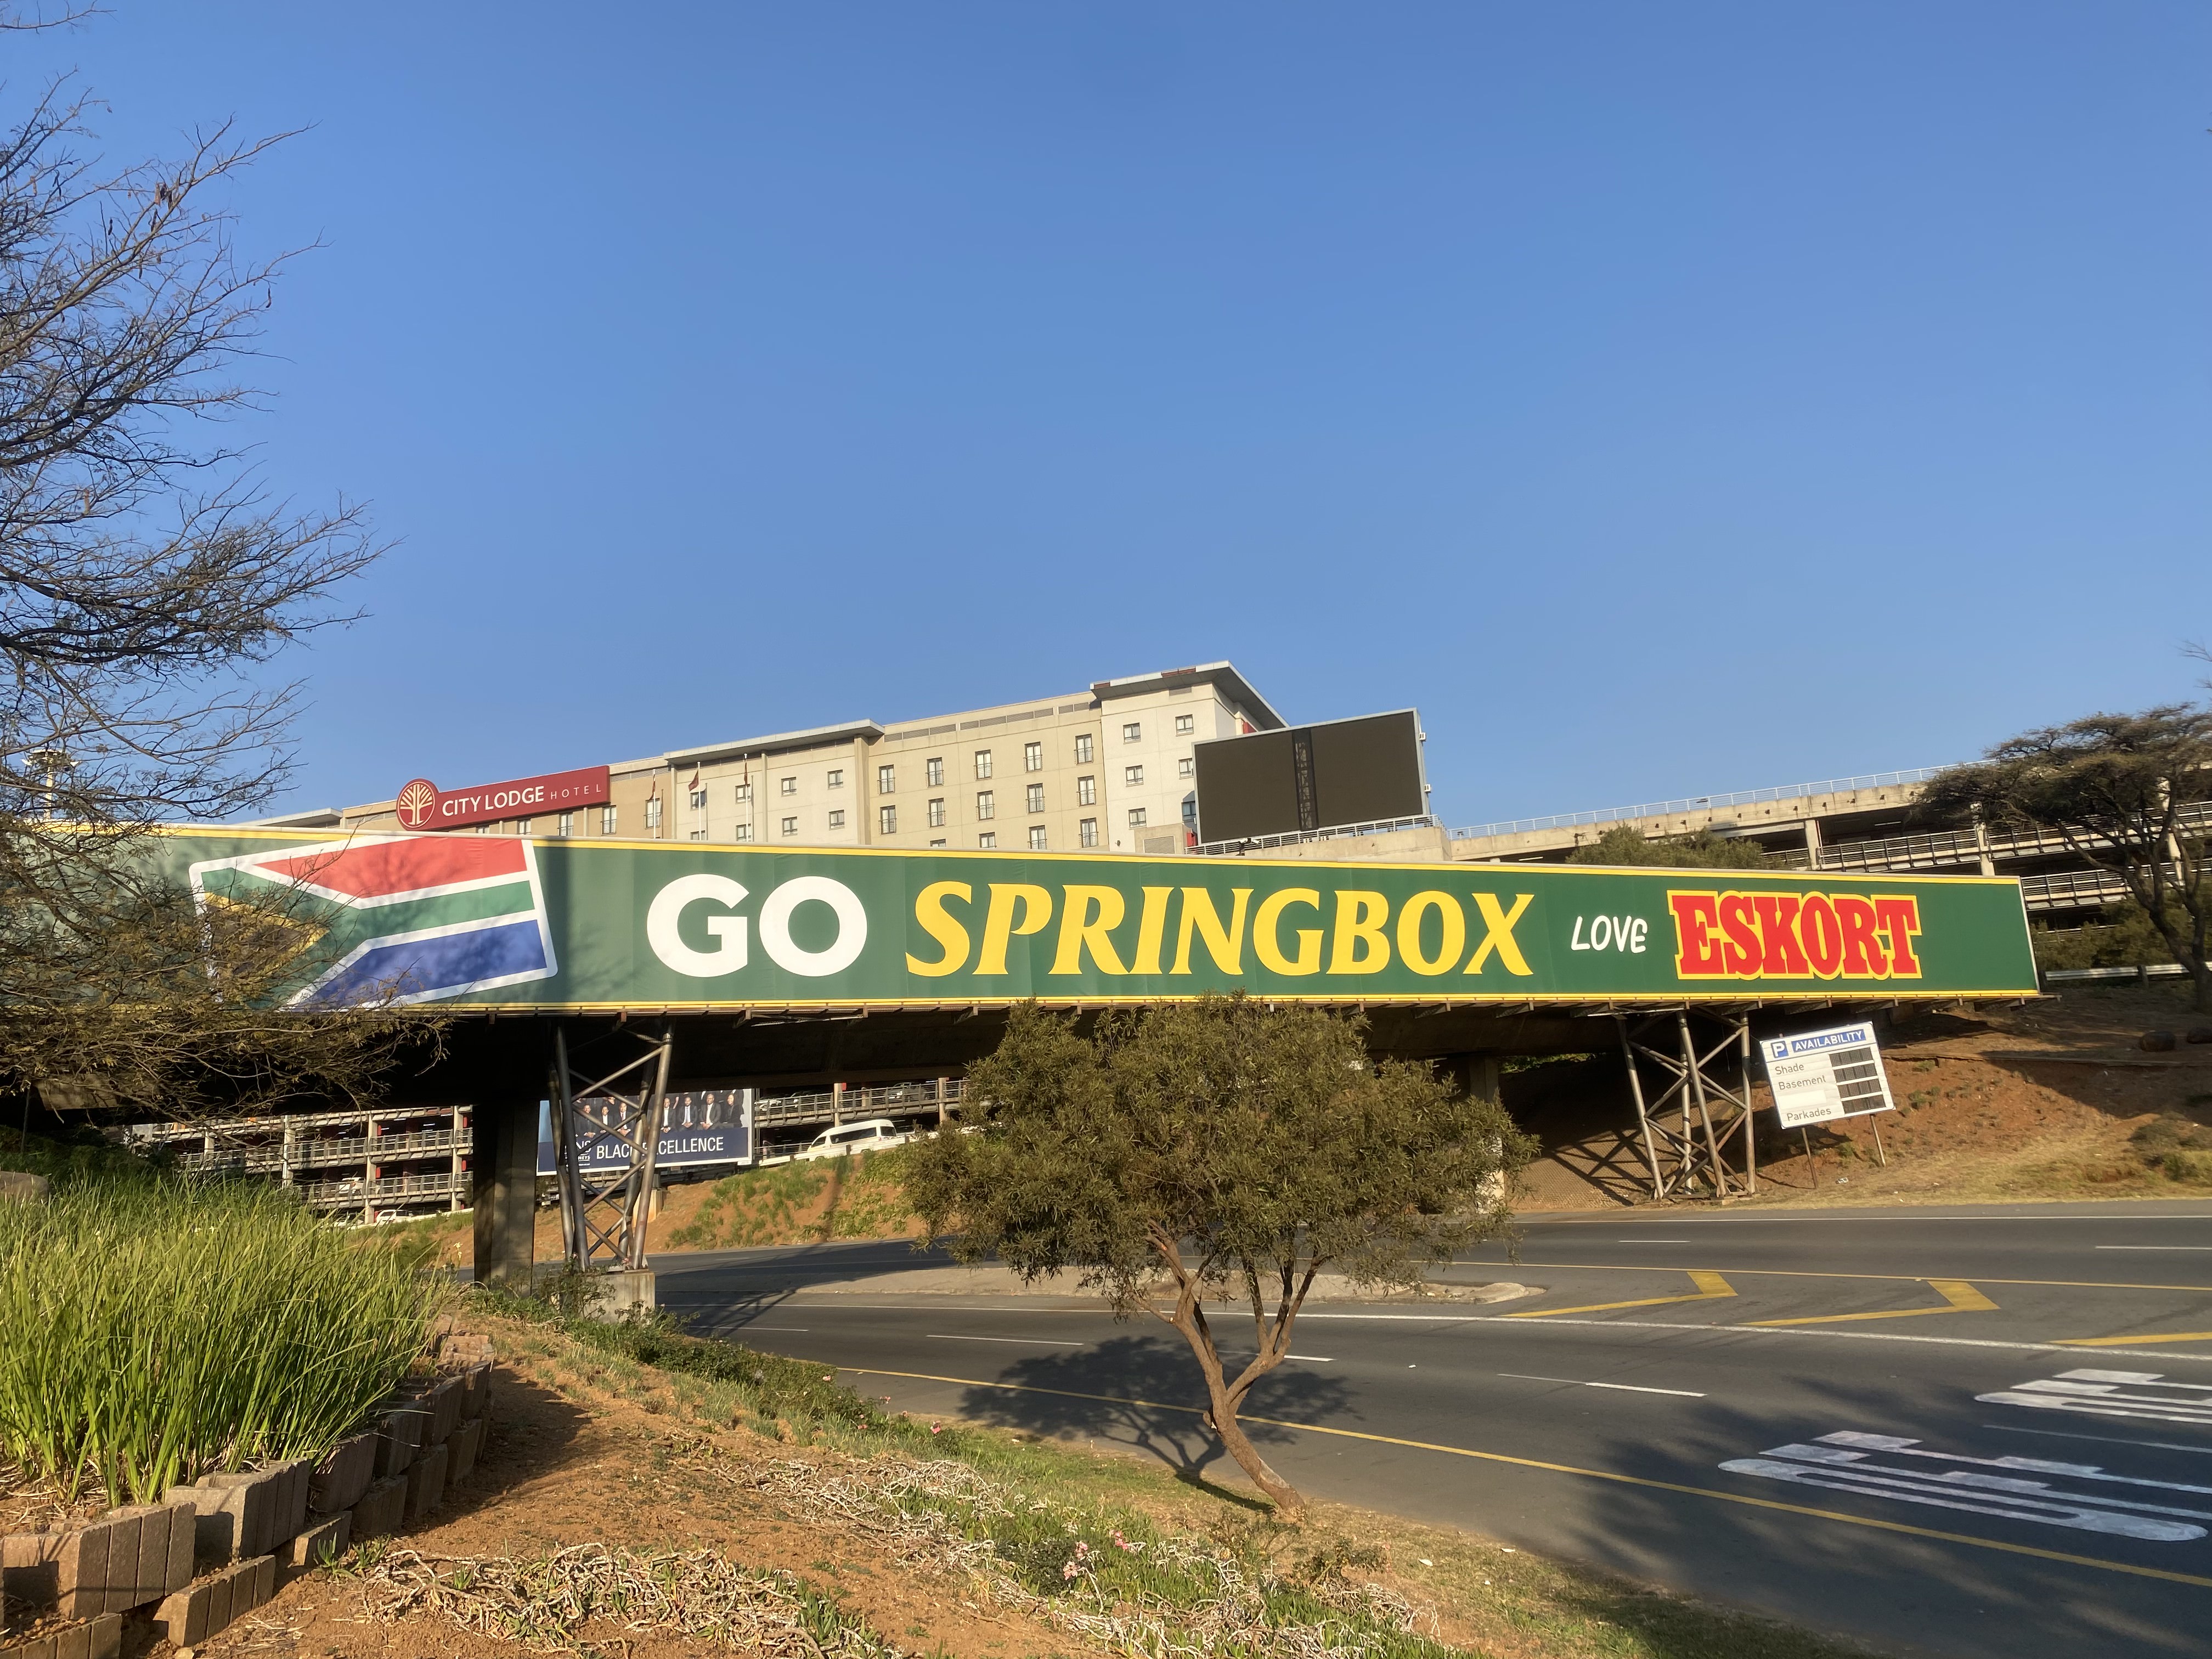 Eskort's SpringBox Triumph: From Typo to Marketing Marvel?!